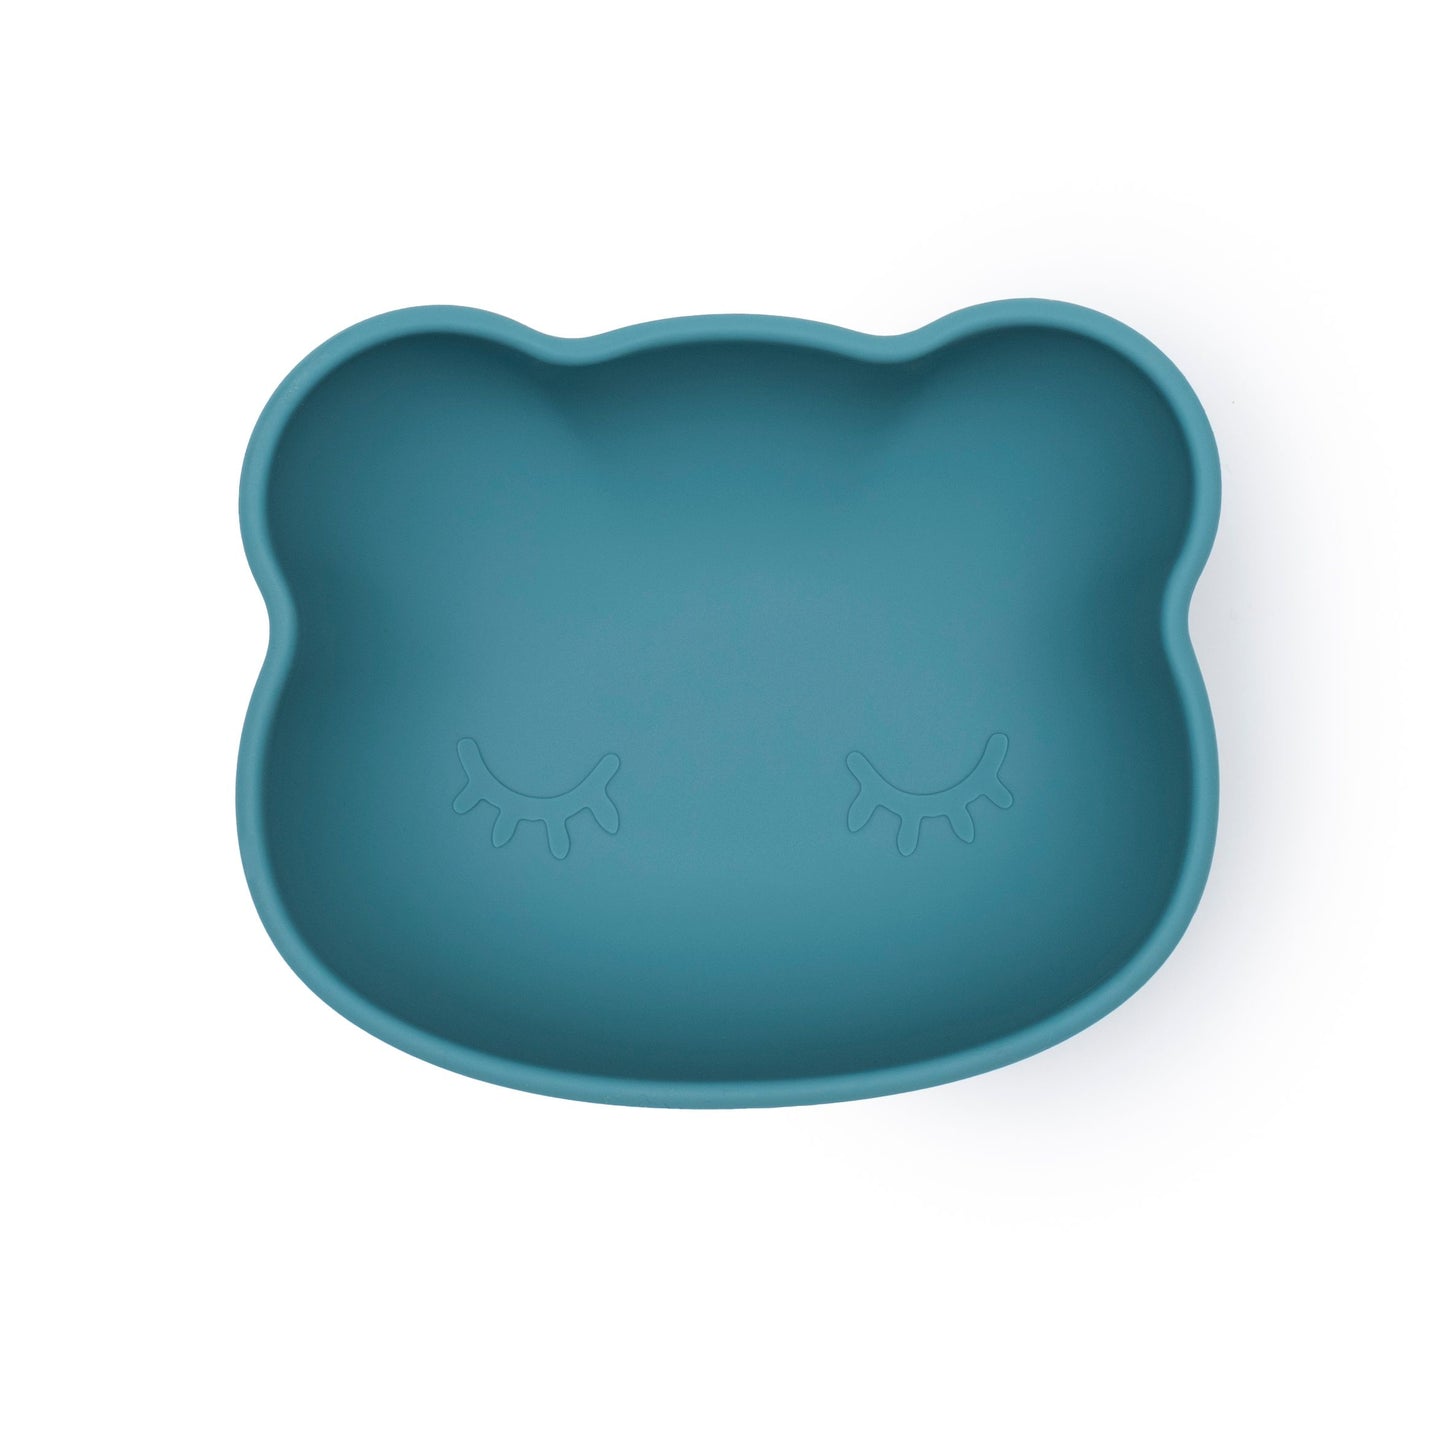 Stickie Bowl - Blue Dusk